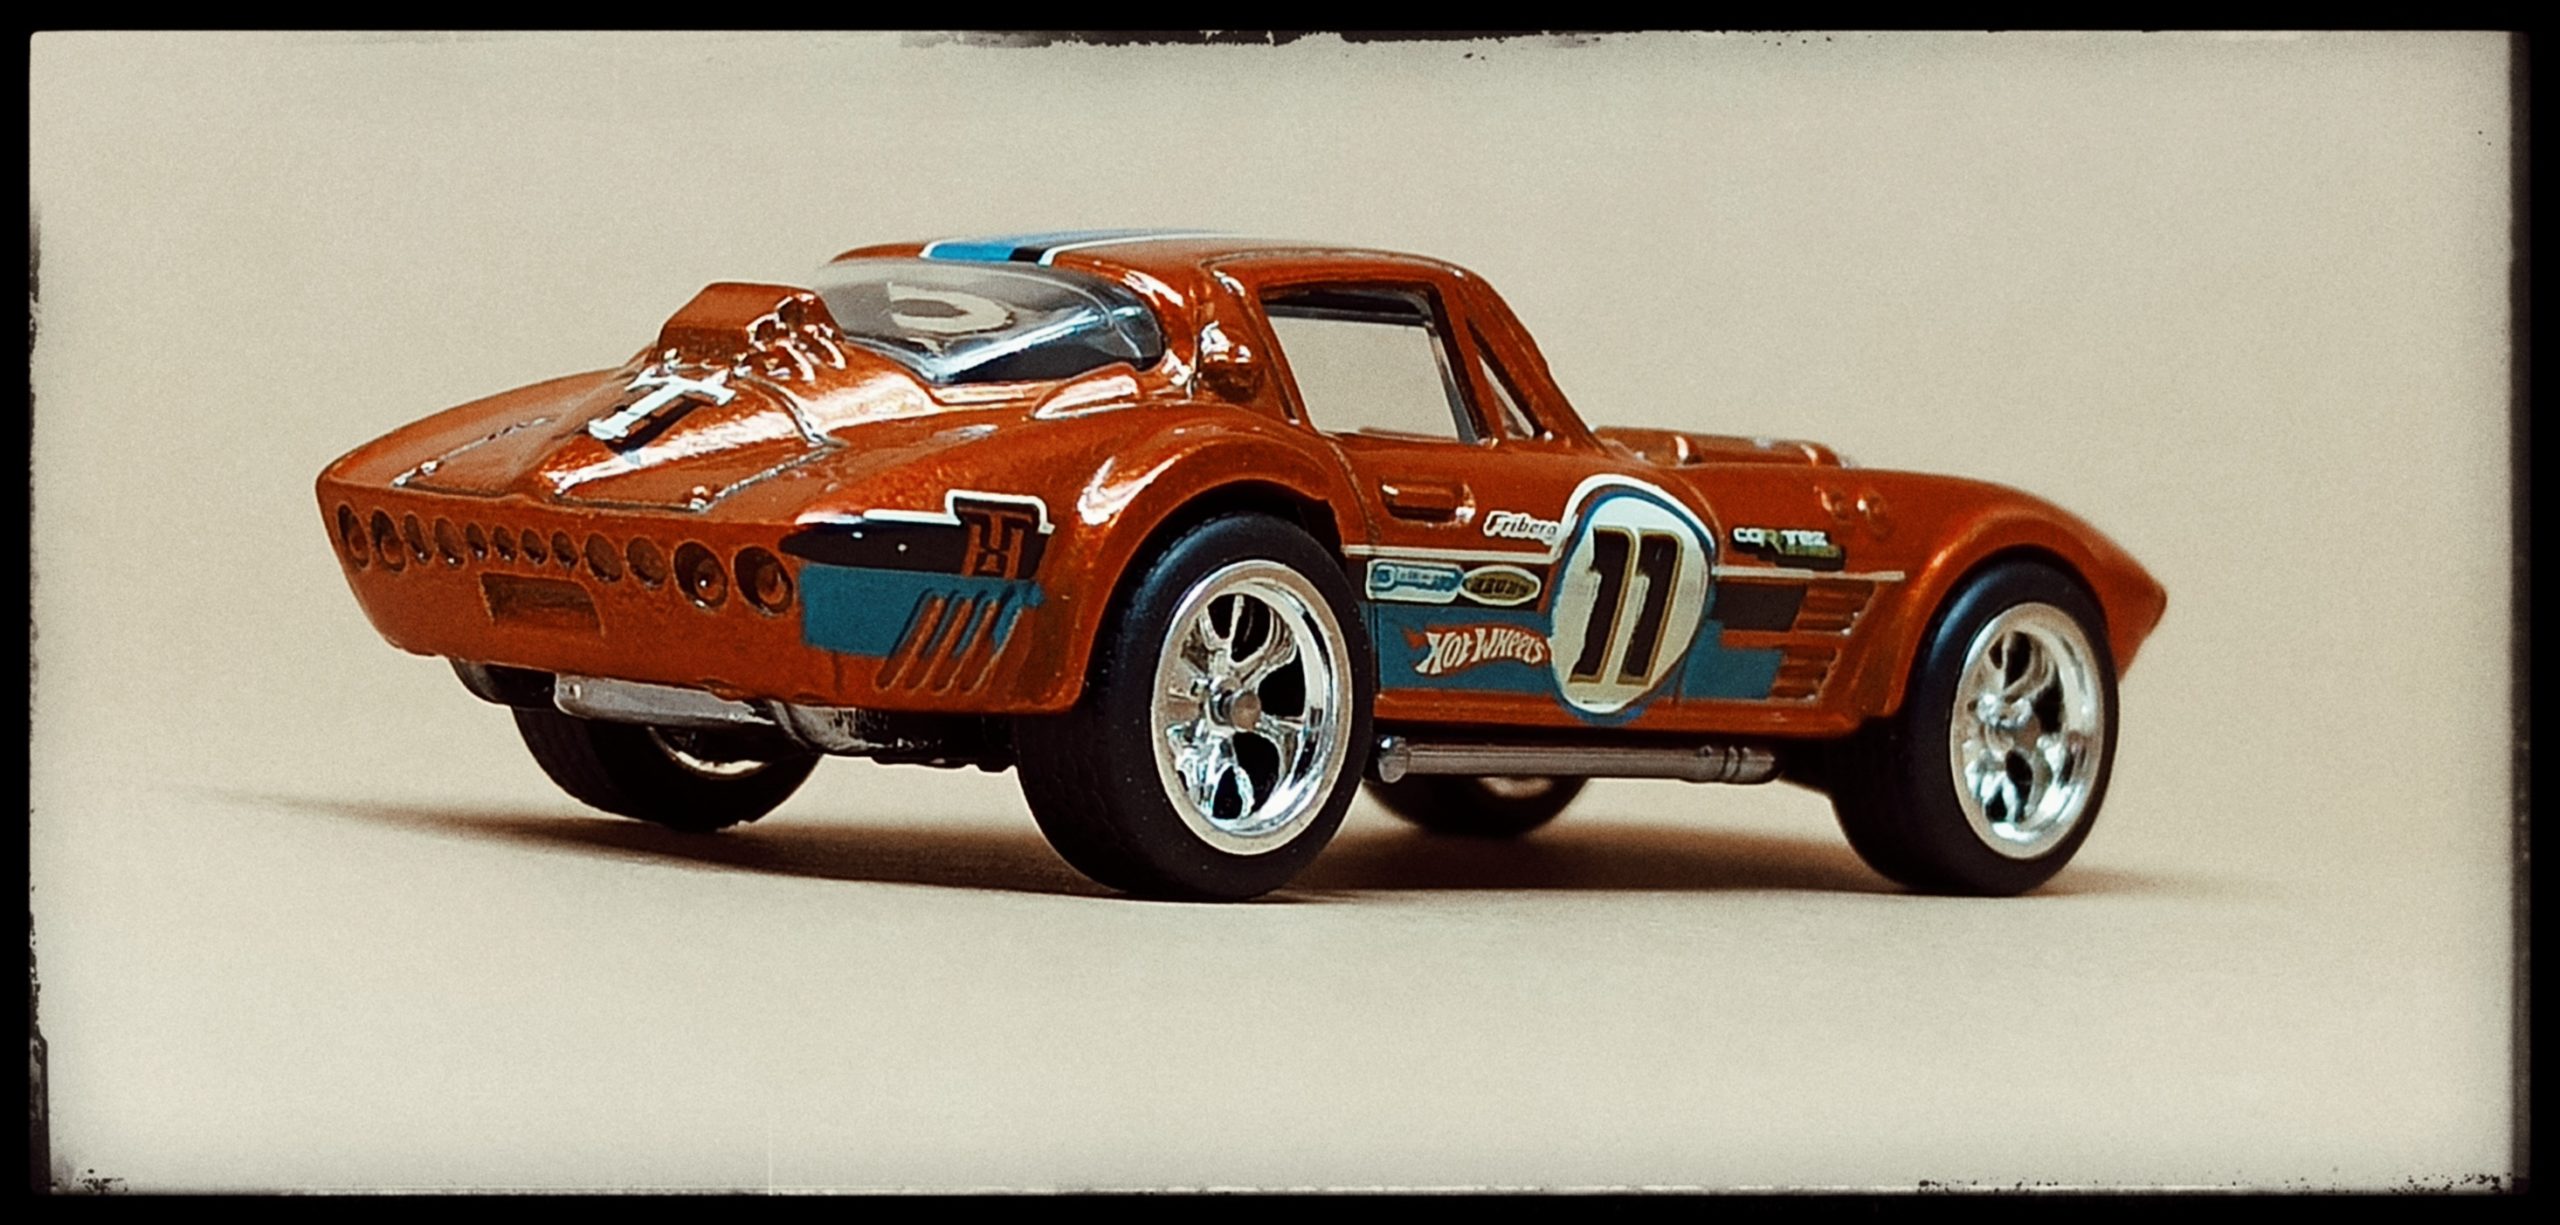 Hot Wheels Corvette Grand Sport (T9744) 2011 (59/244) Trea$ure Hunt$ (9/15) spectraflame orange Super Treasure Hunt (STH)